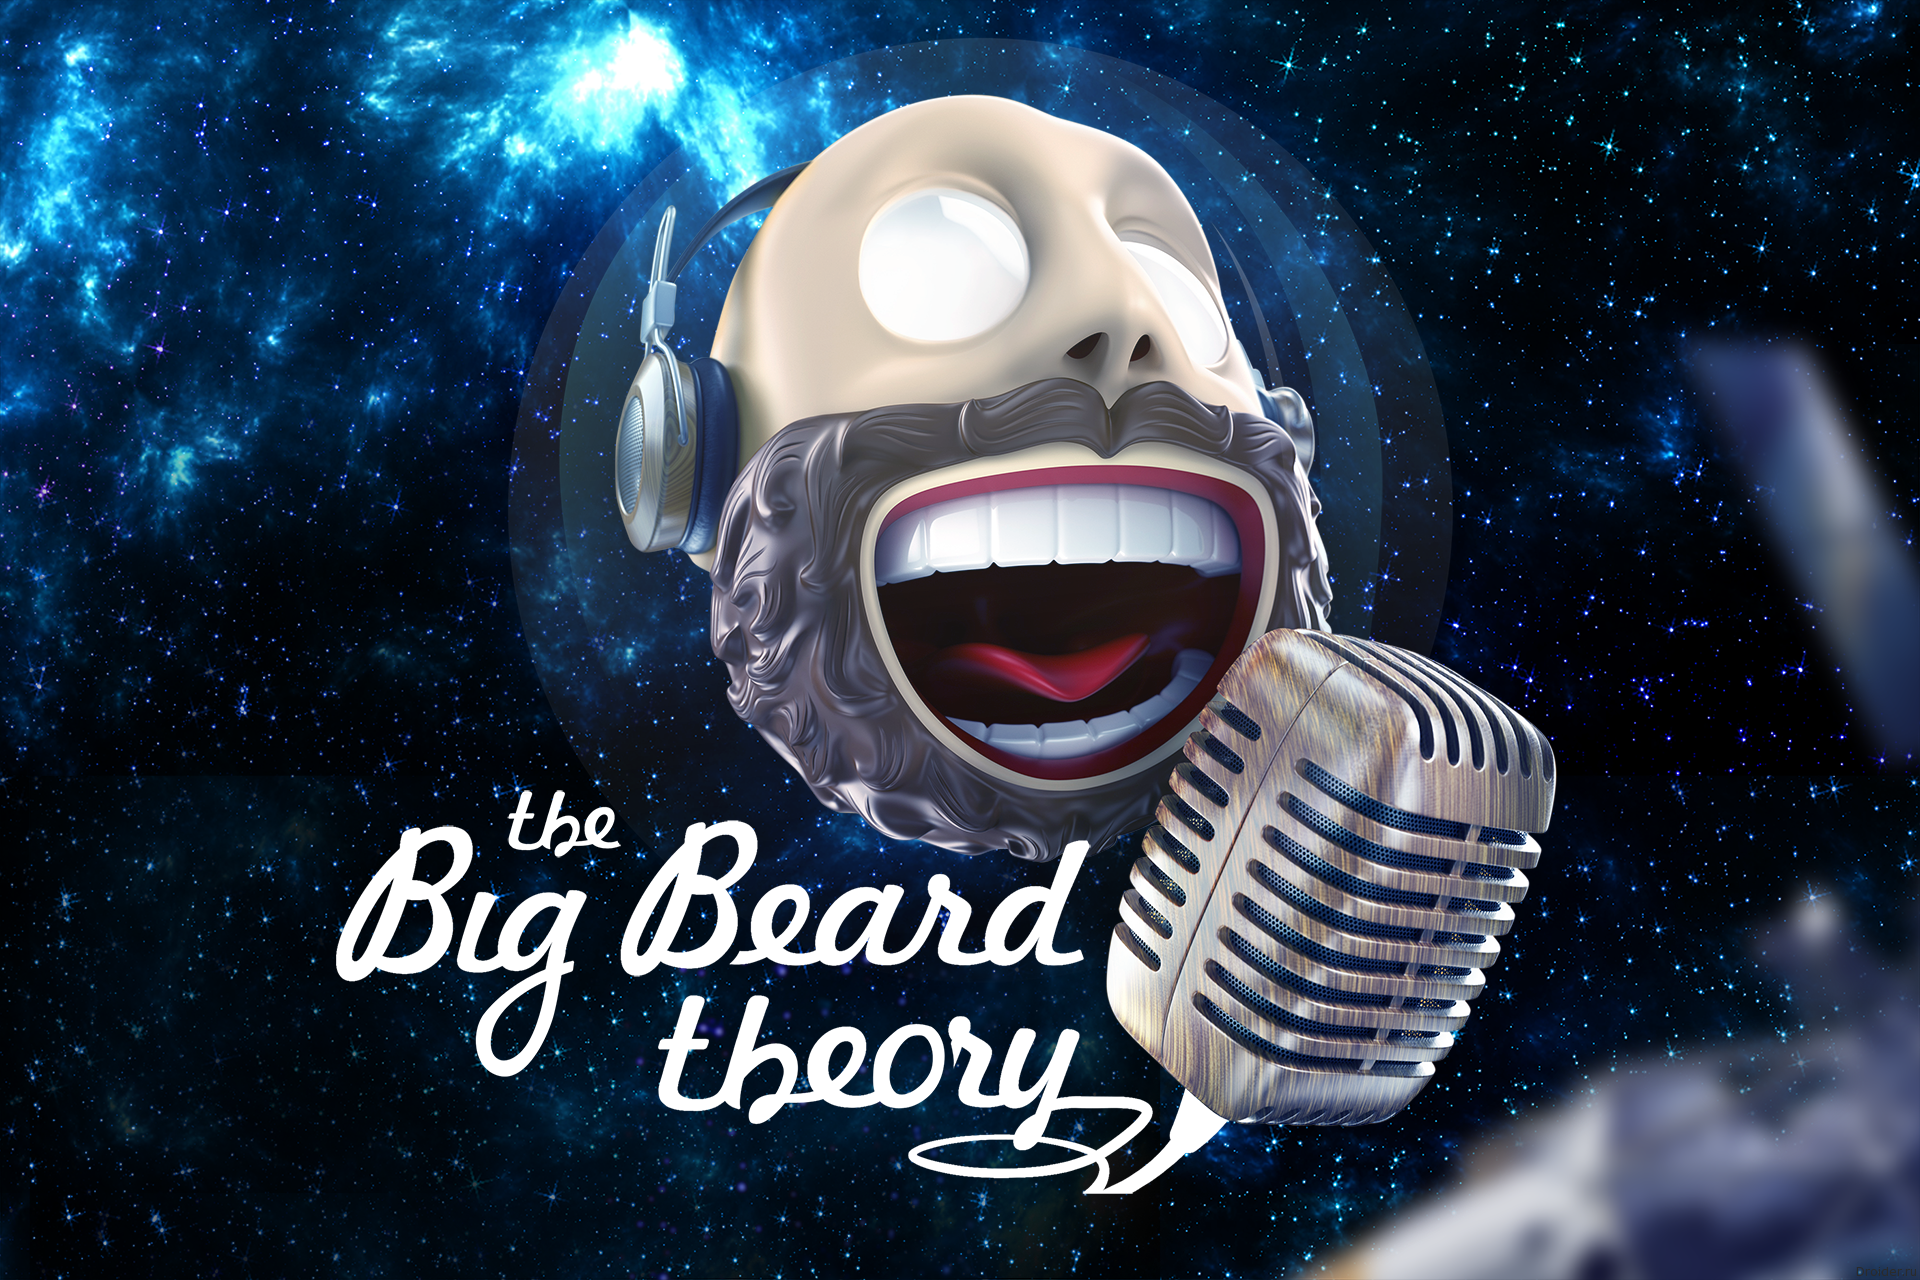 The Big Beard Theory